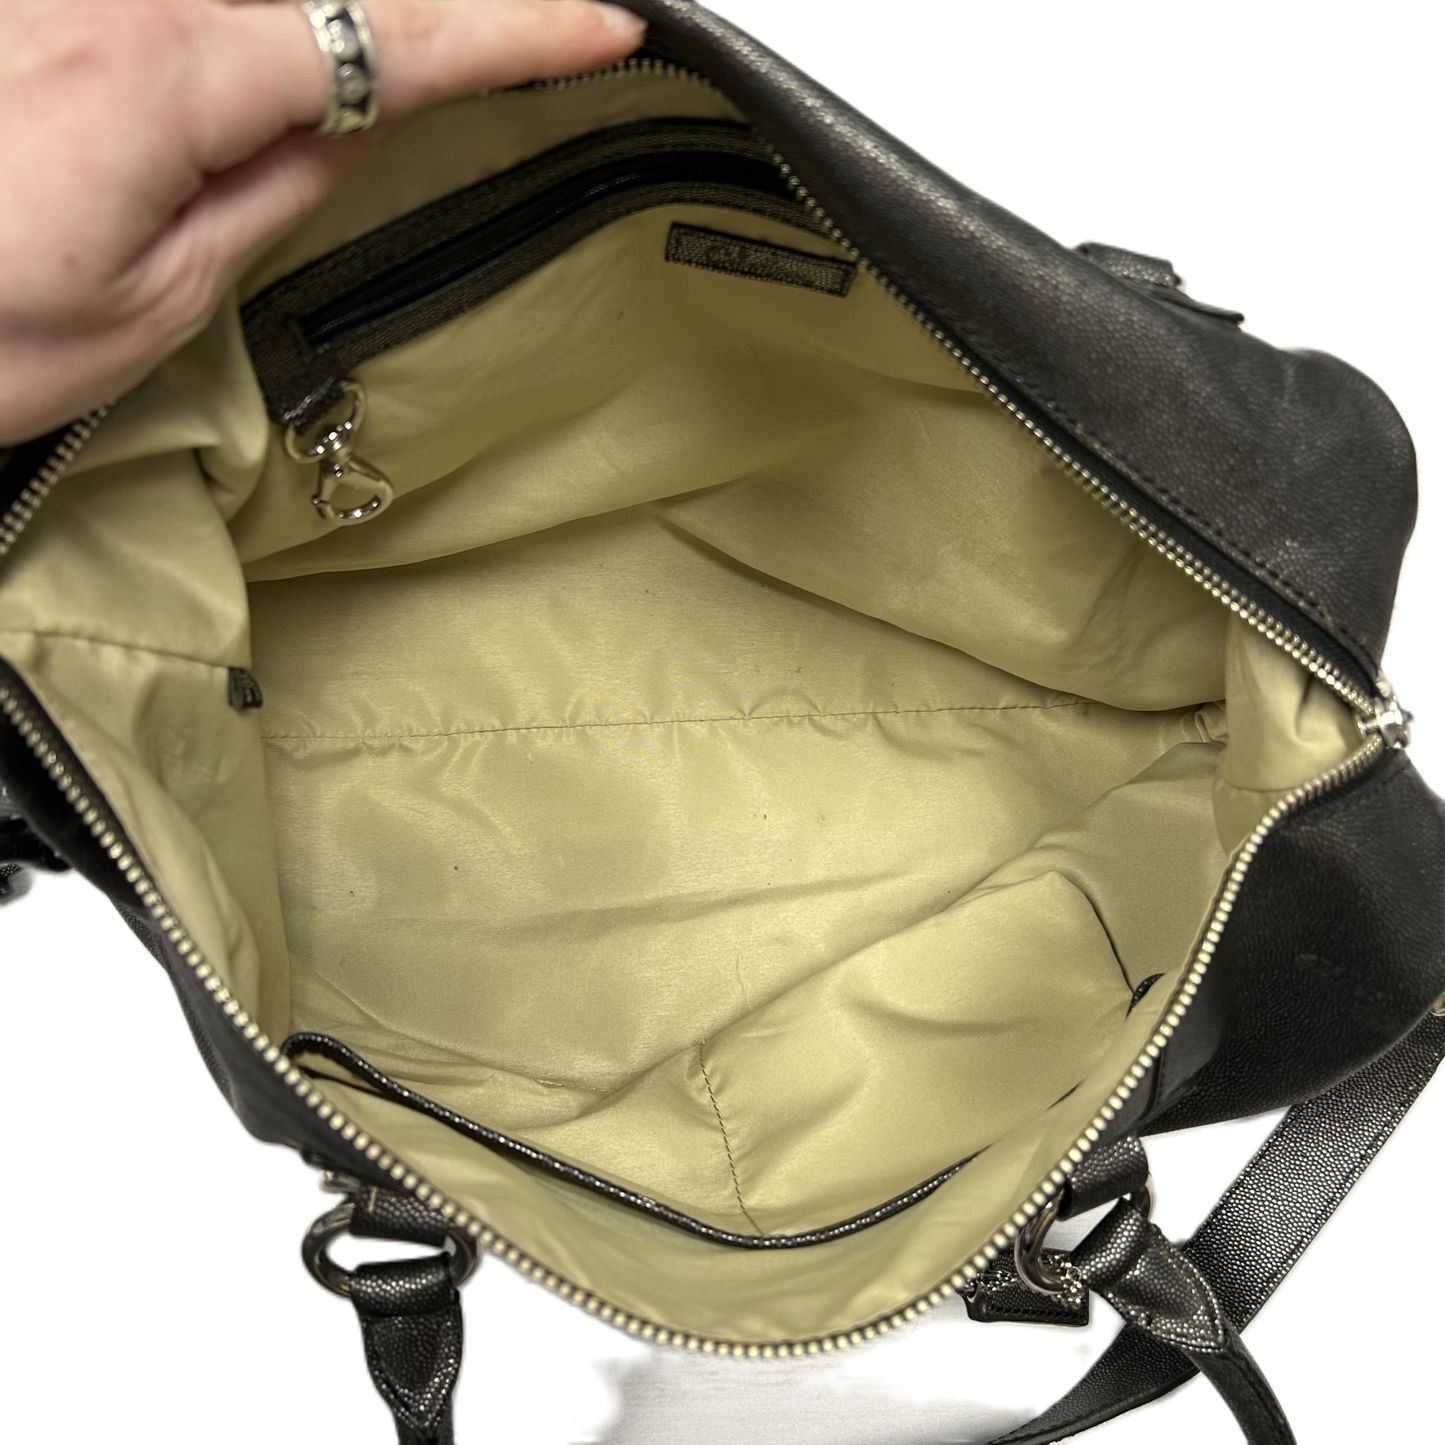 Handbag Designer By Cole-haan  Size: Medium